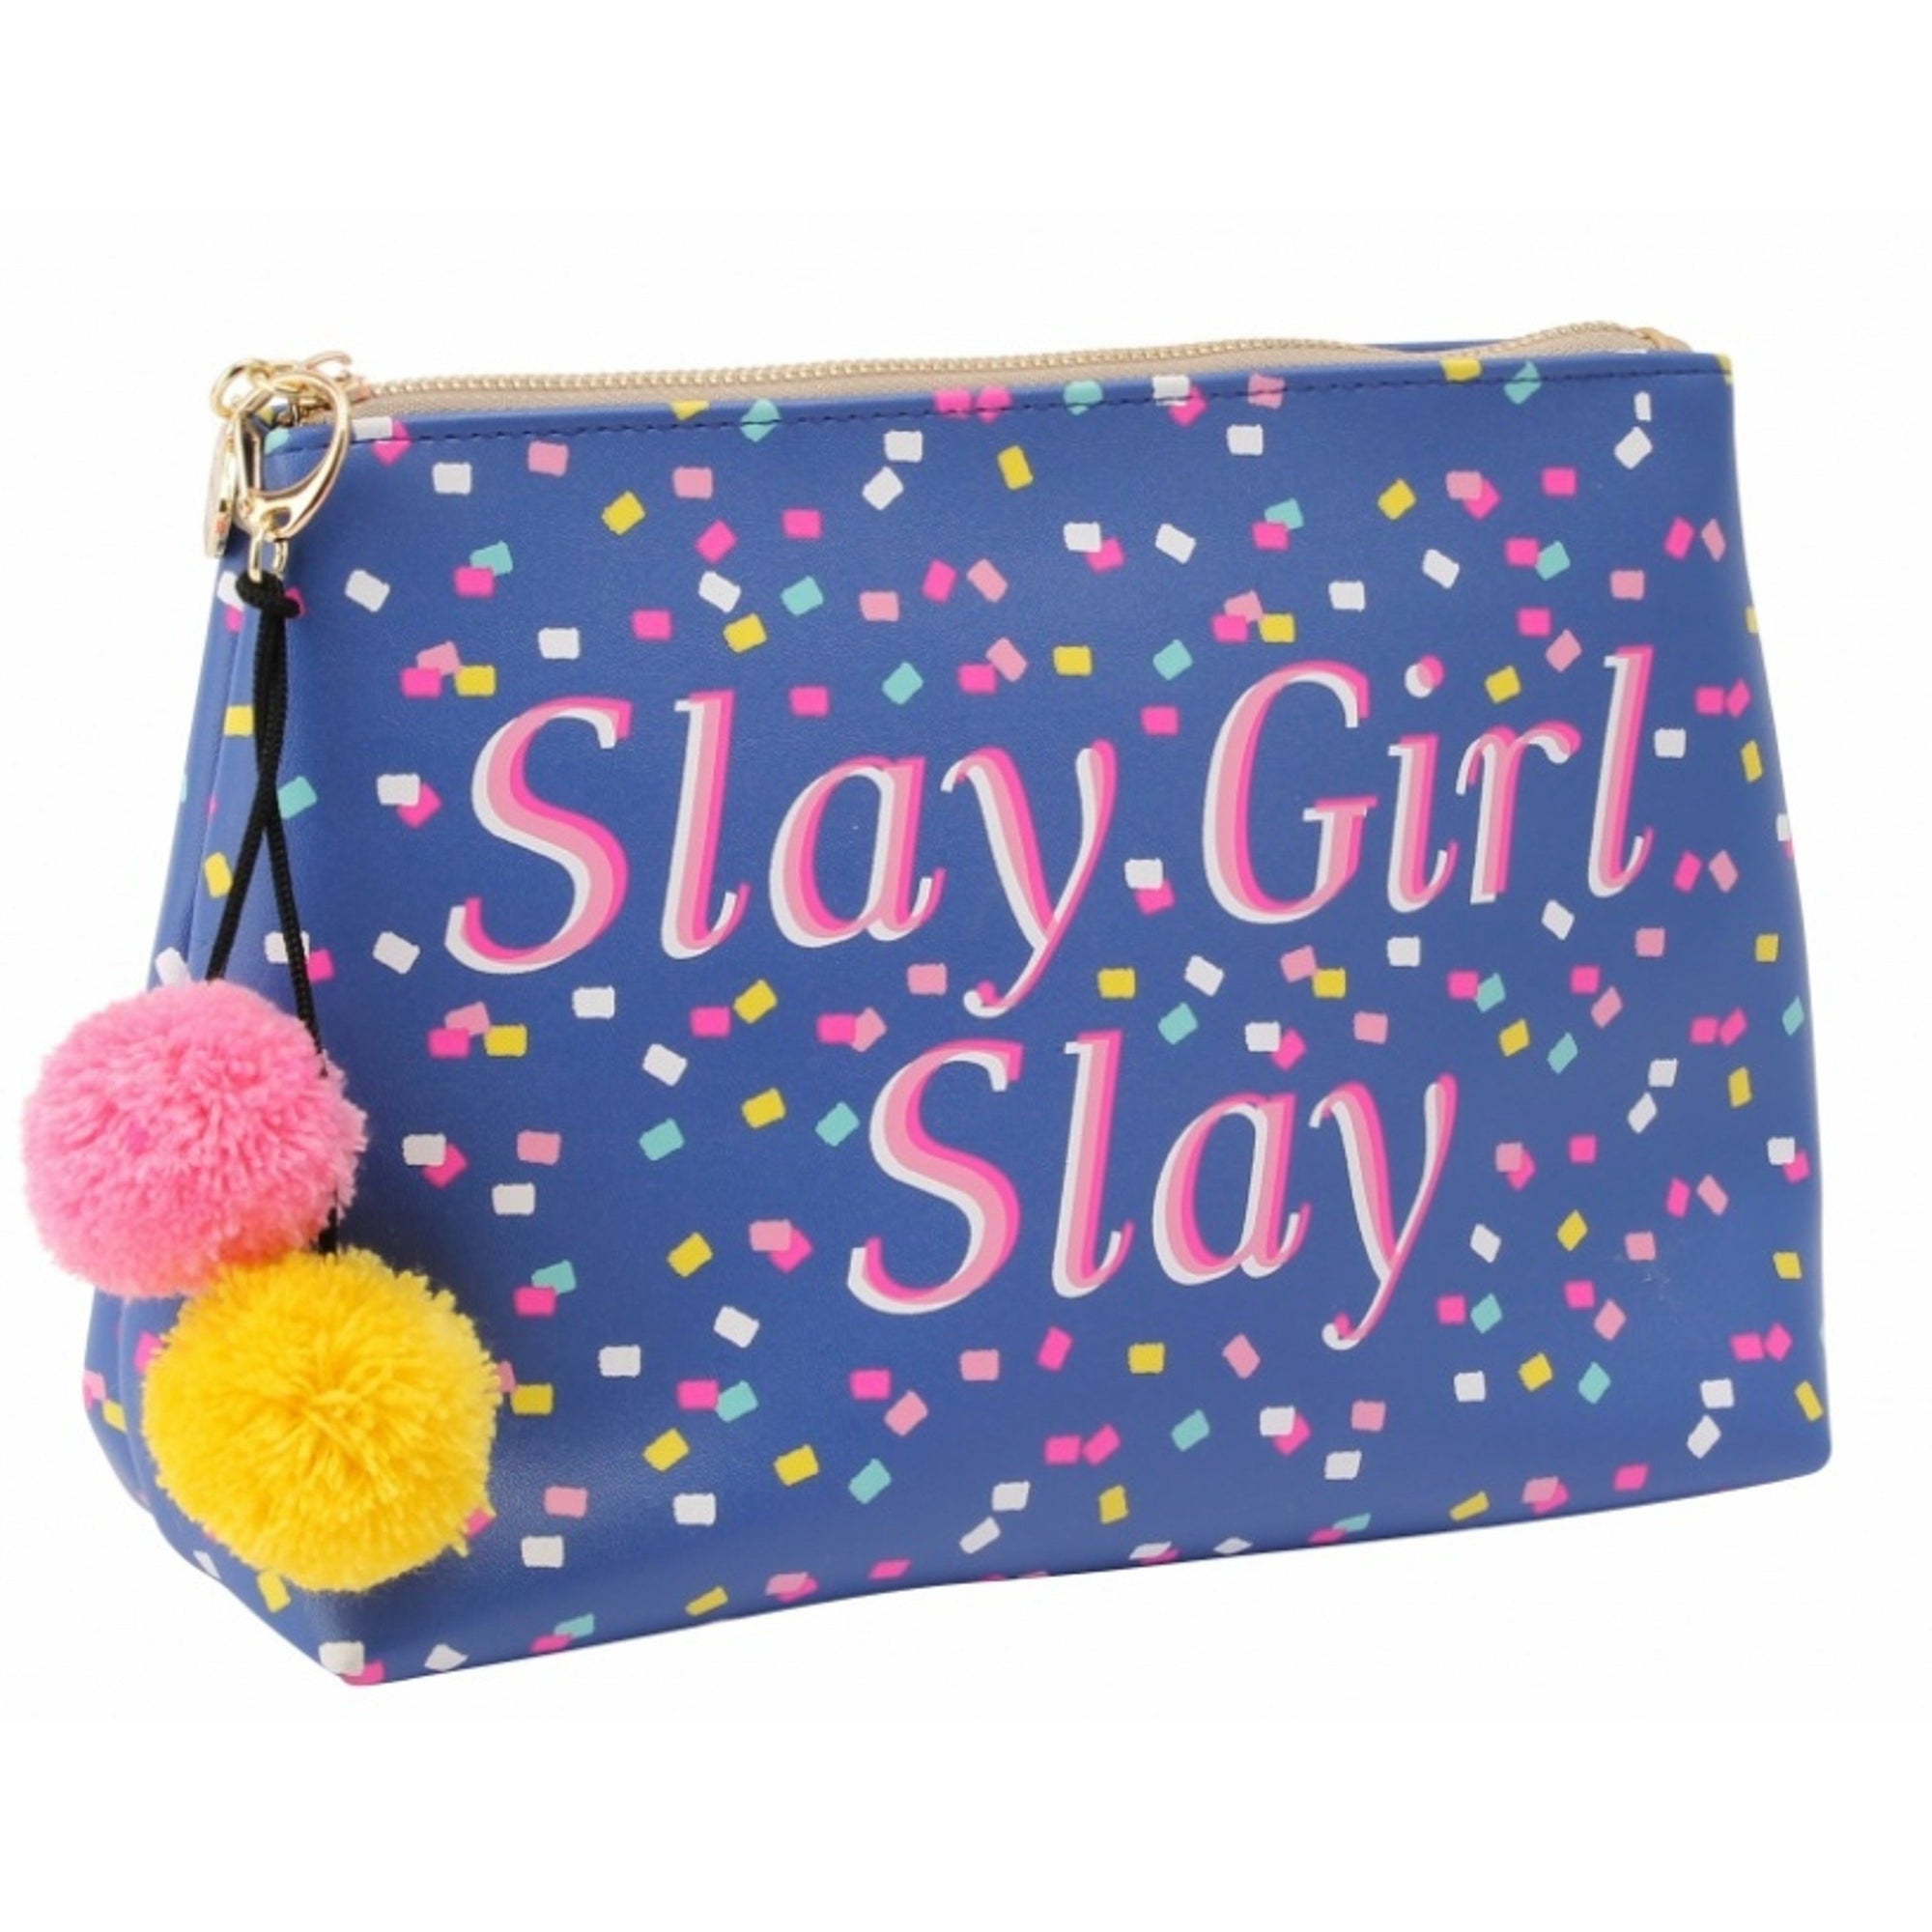 Slay girl slay - Wash bag Not specified